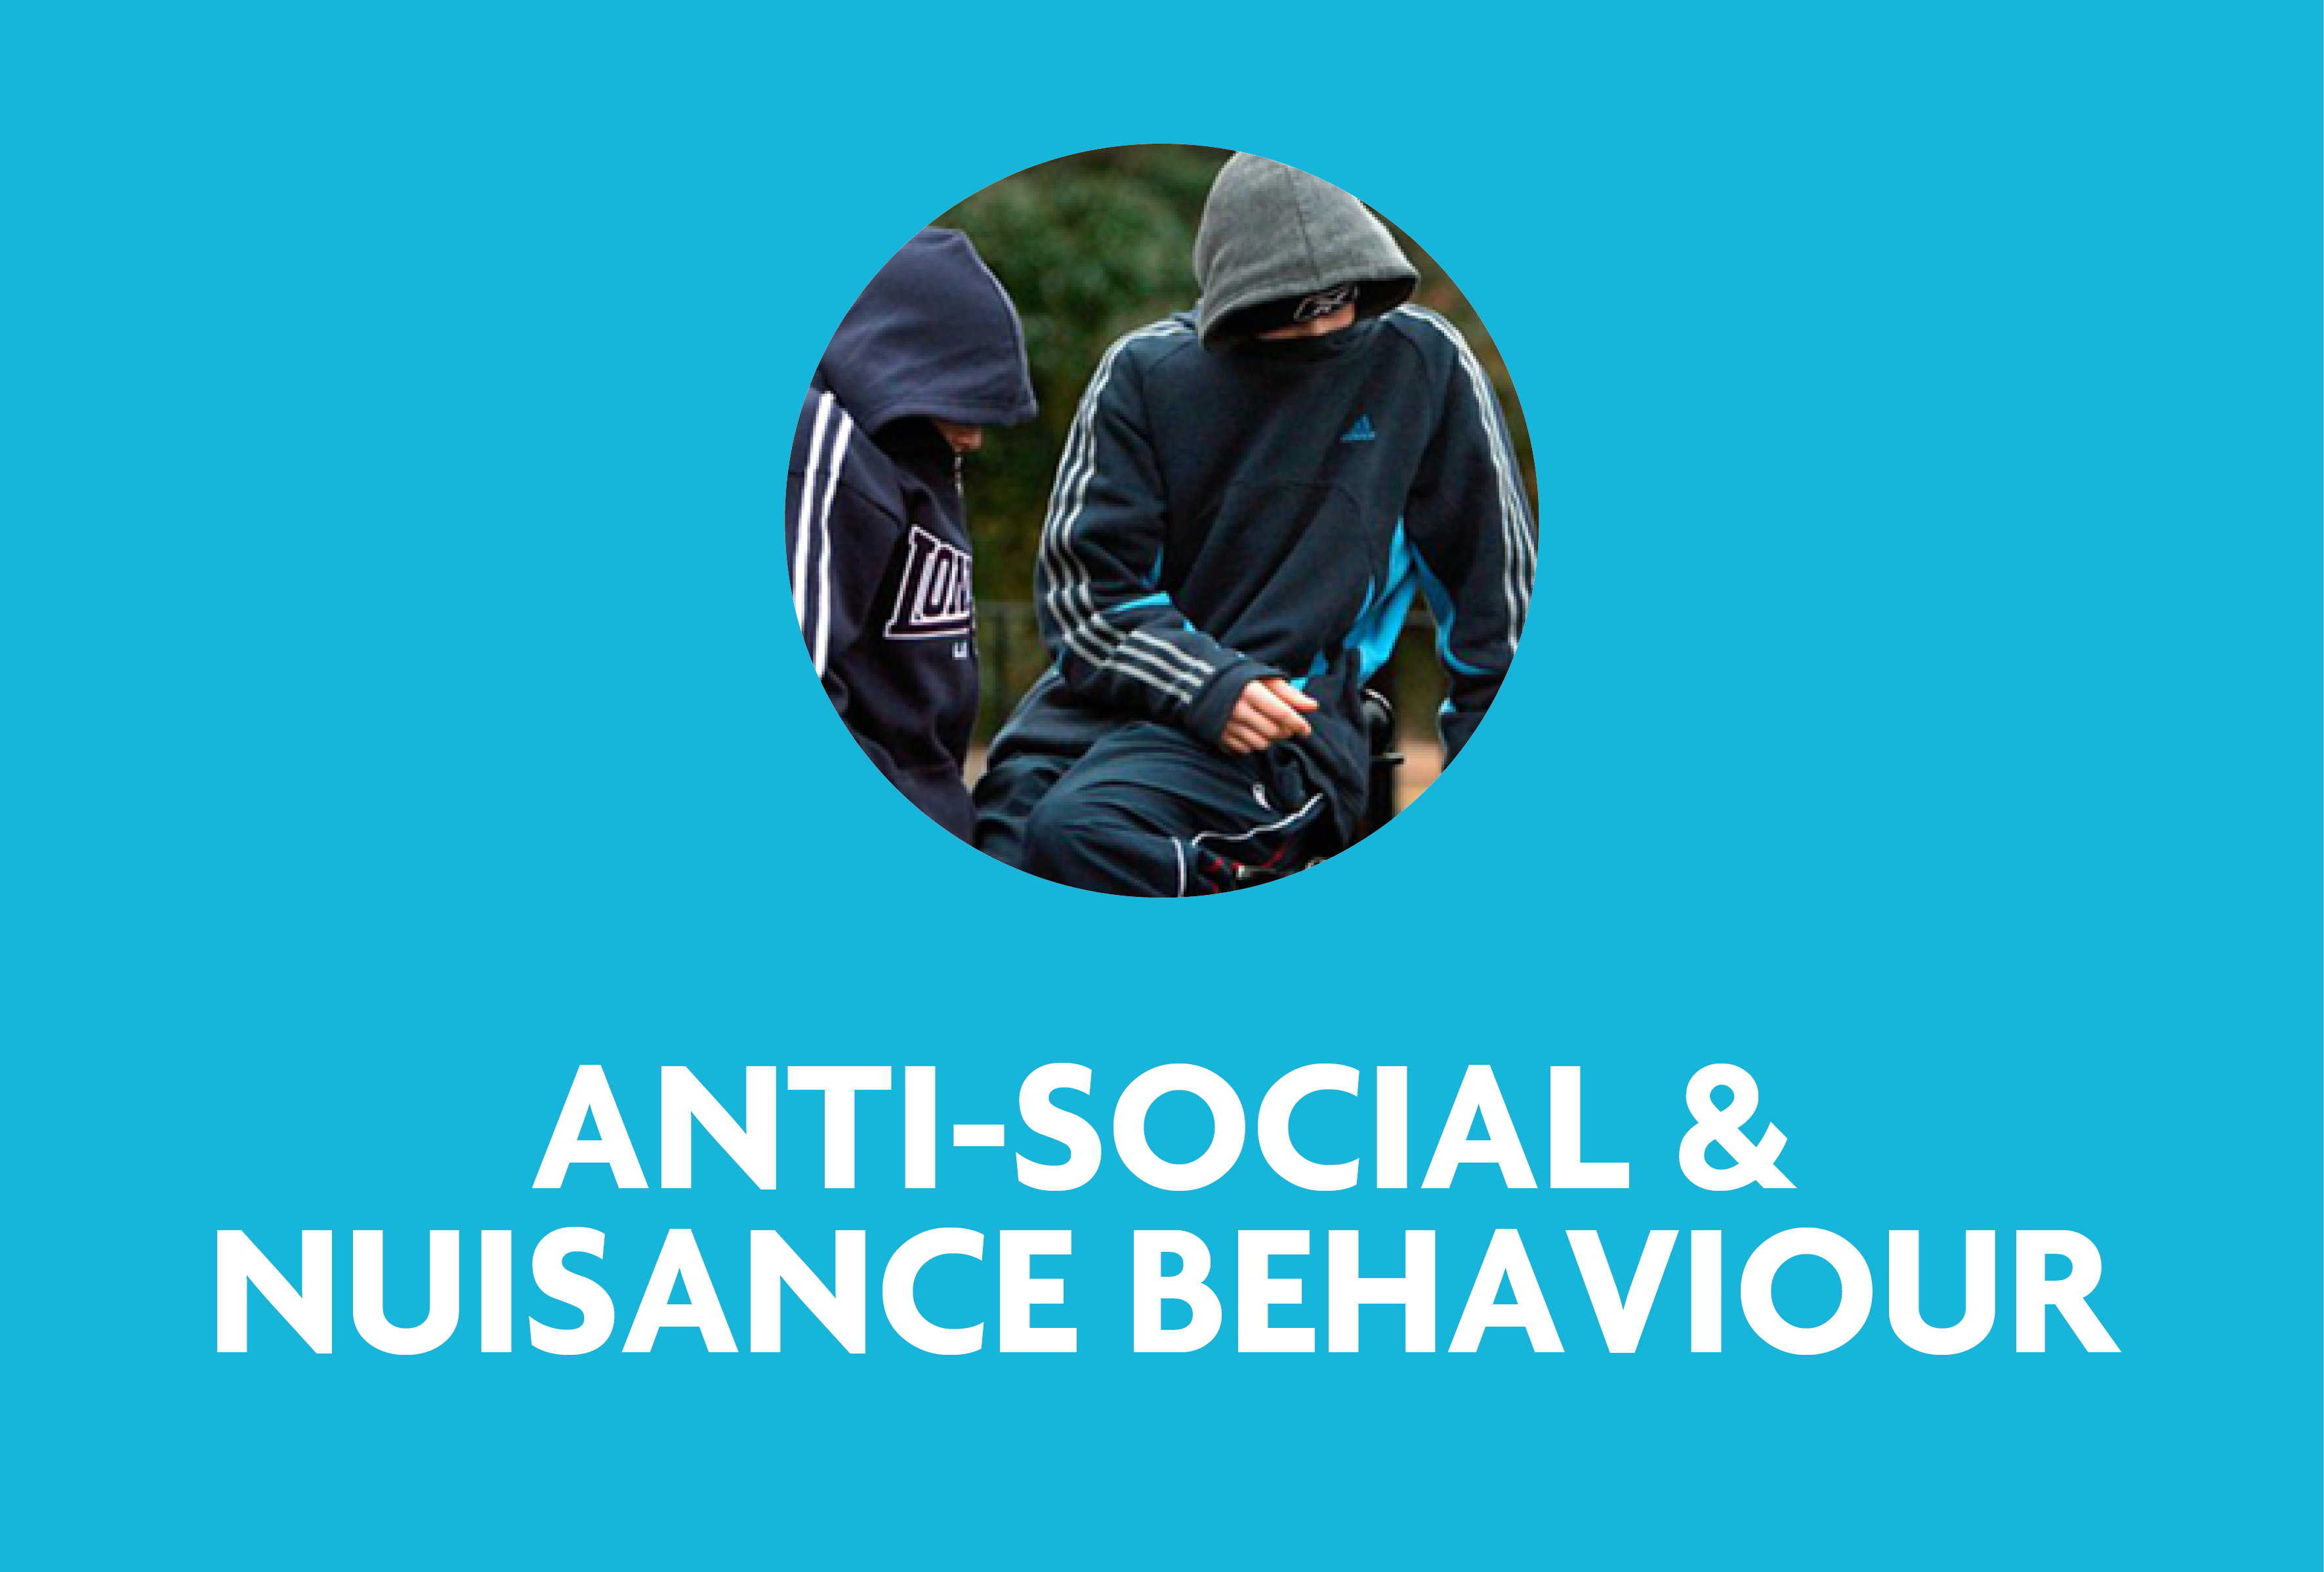 Anti-social and nuisance behaviour